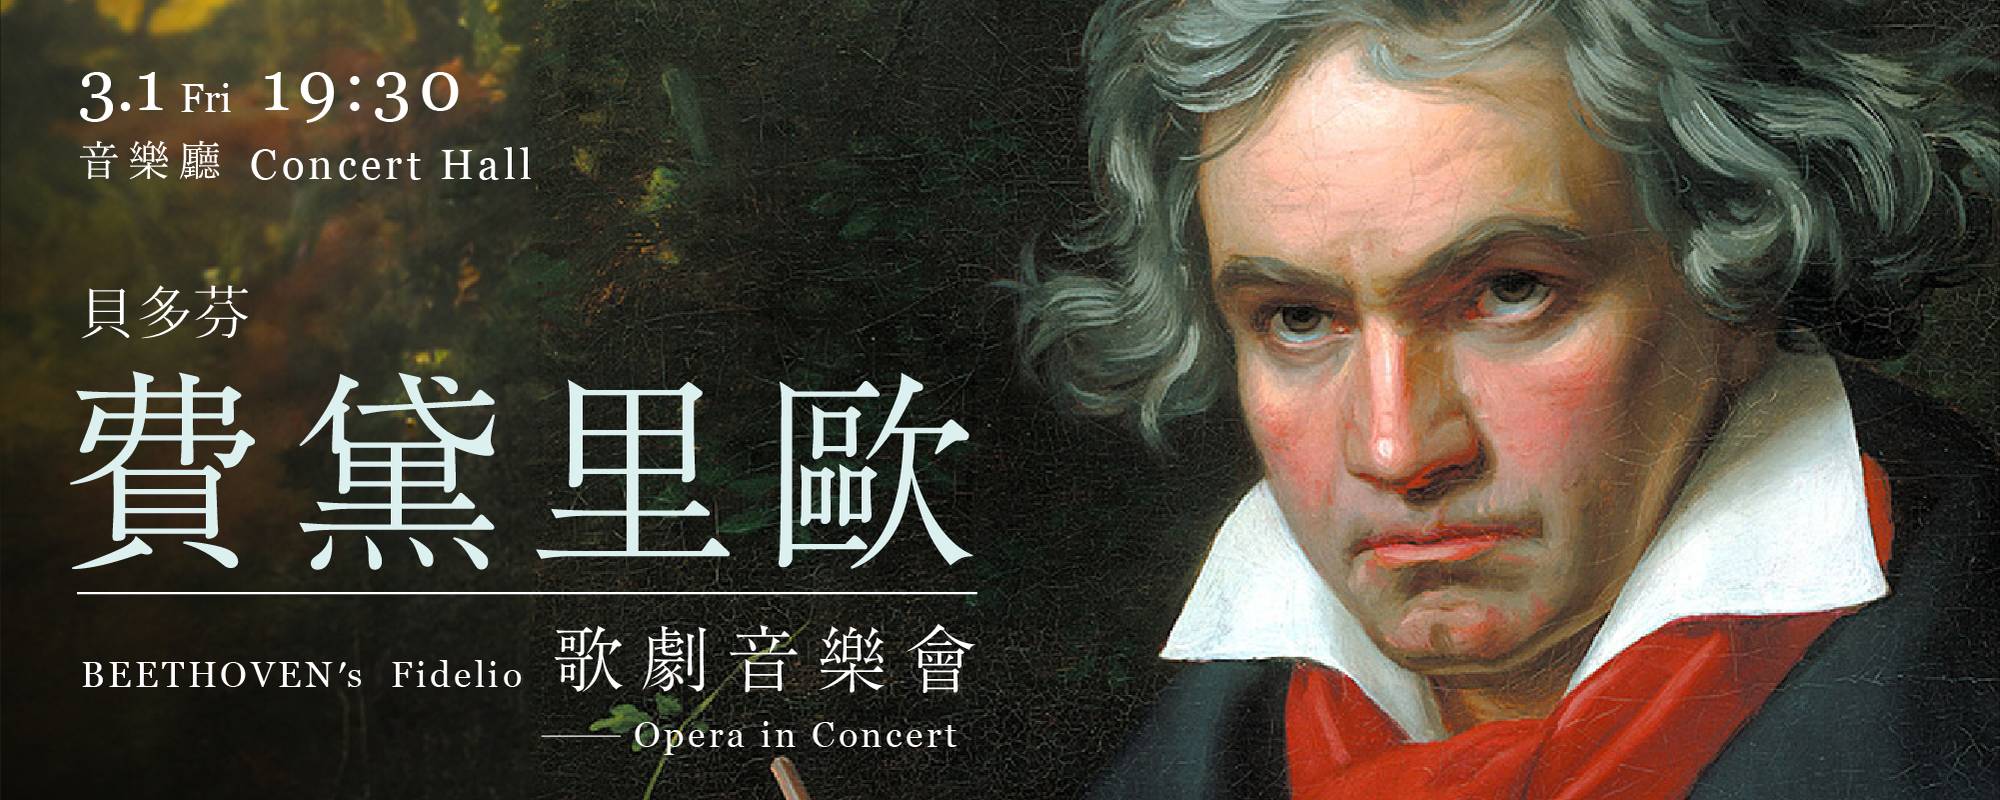 BEETHOVEN's Fidelio - Opera in Concert